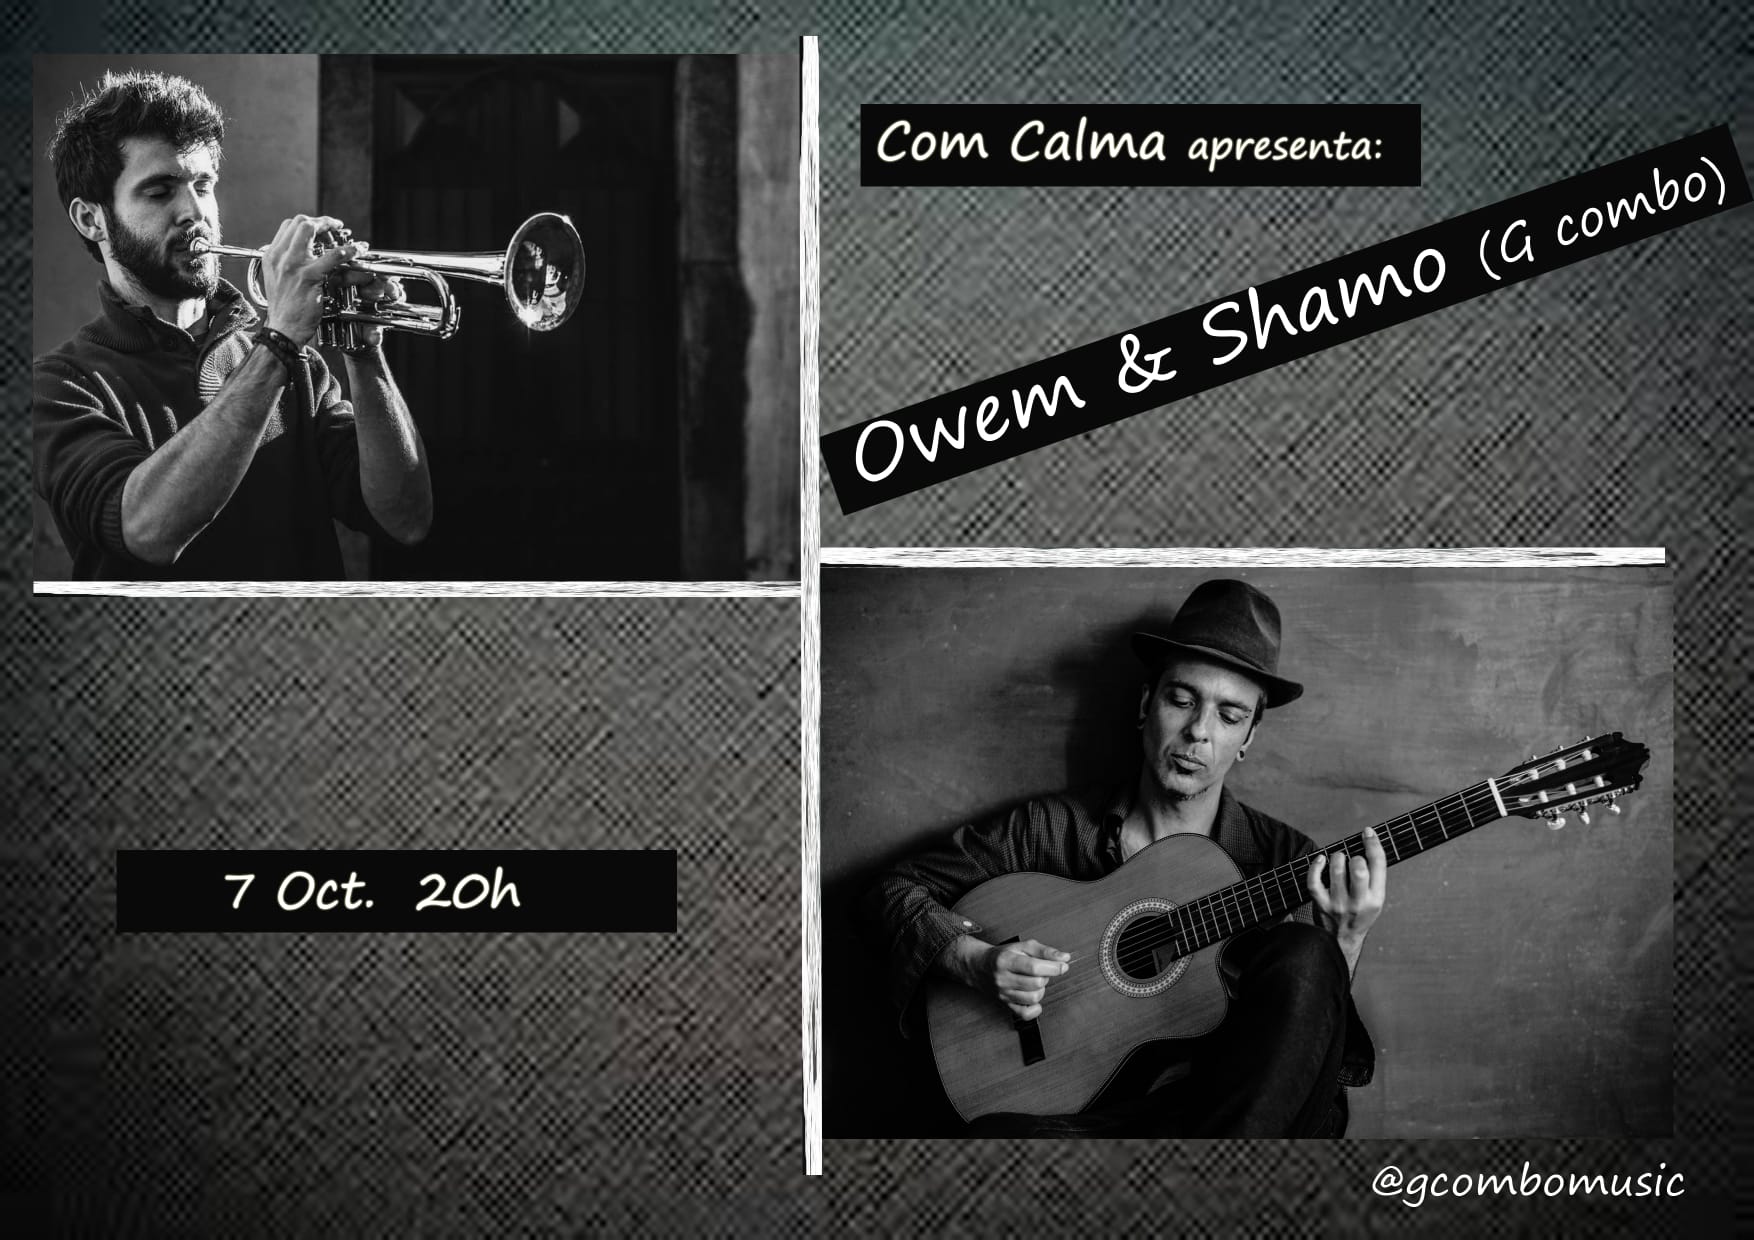 Owem & Shamo (G combo)